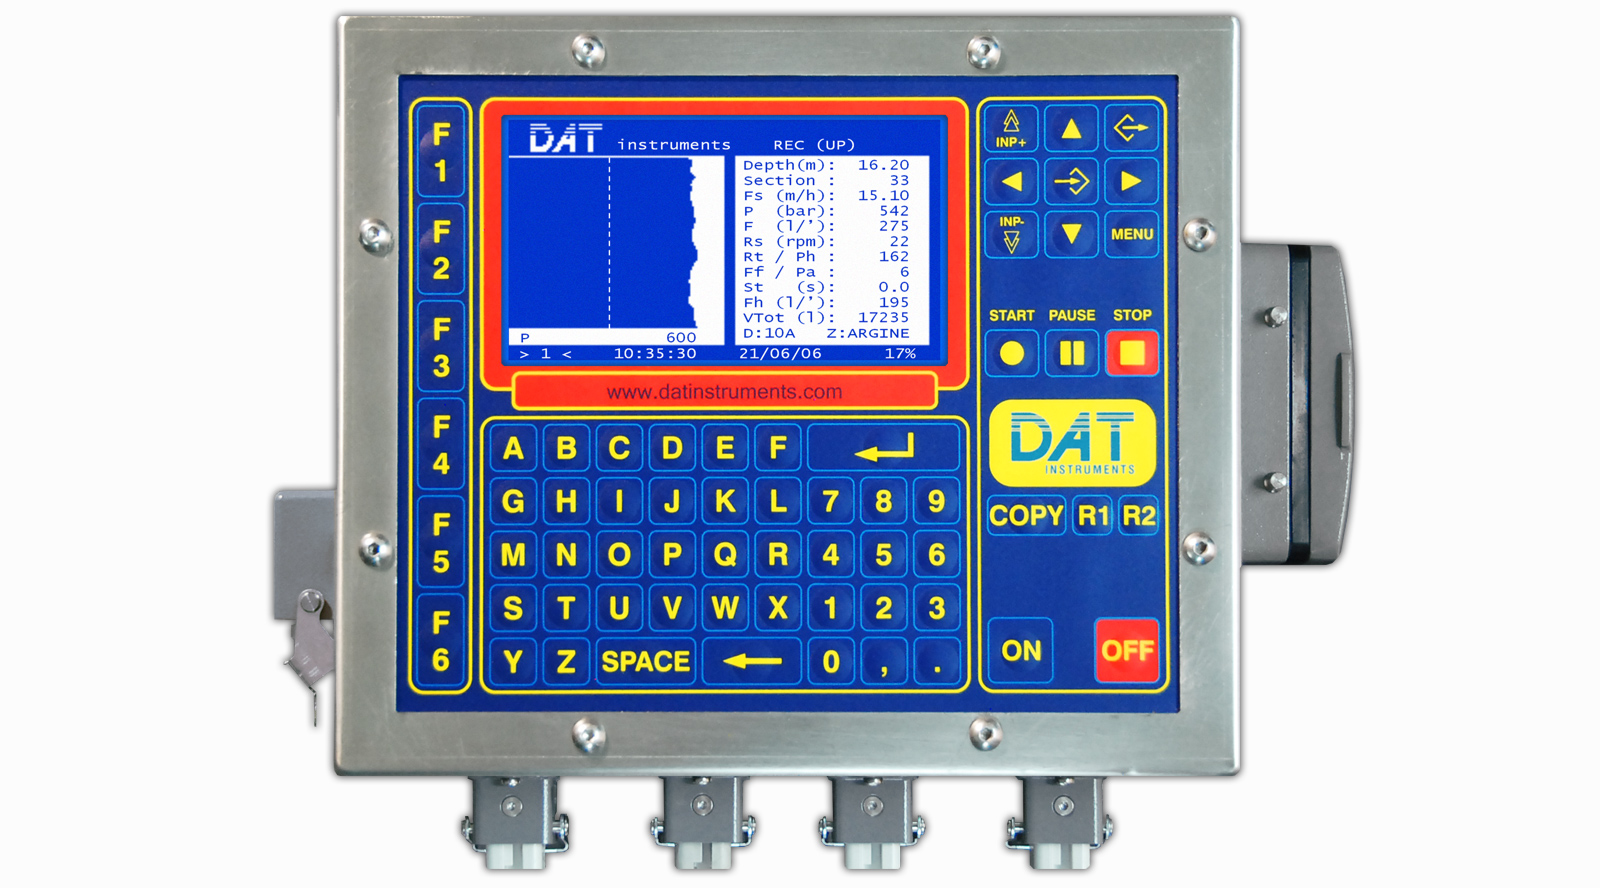 DAT instruments, JET 4000 AME - J, datalogger para Jet grouting, Perforaciónes, DAC test, CFA, Deep mixing, Soil mixing, Vibroflotación SCP